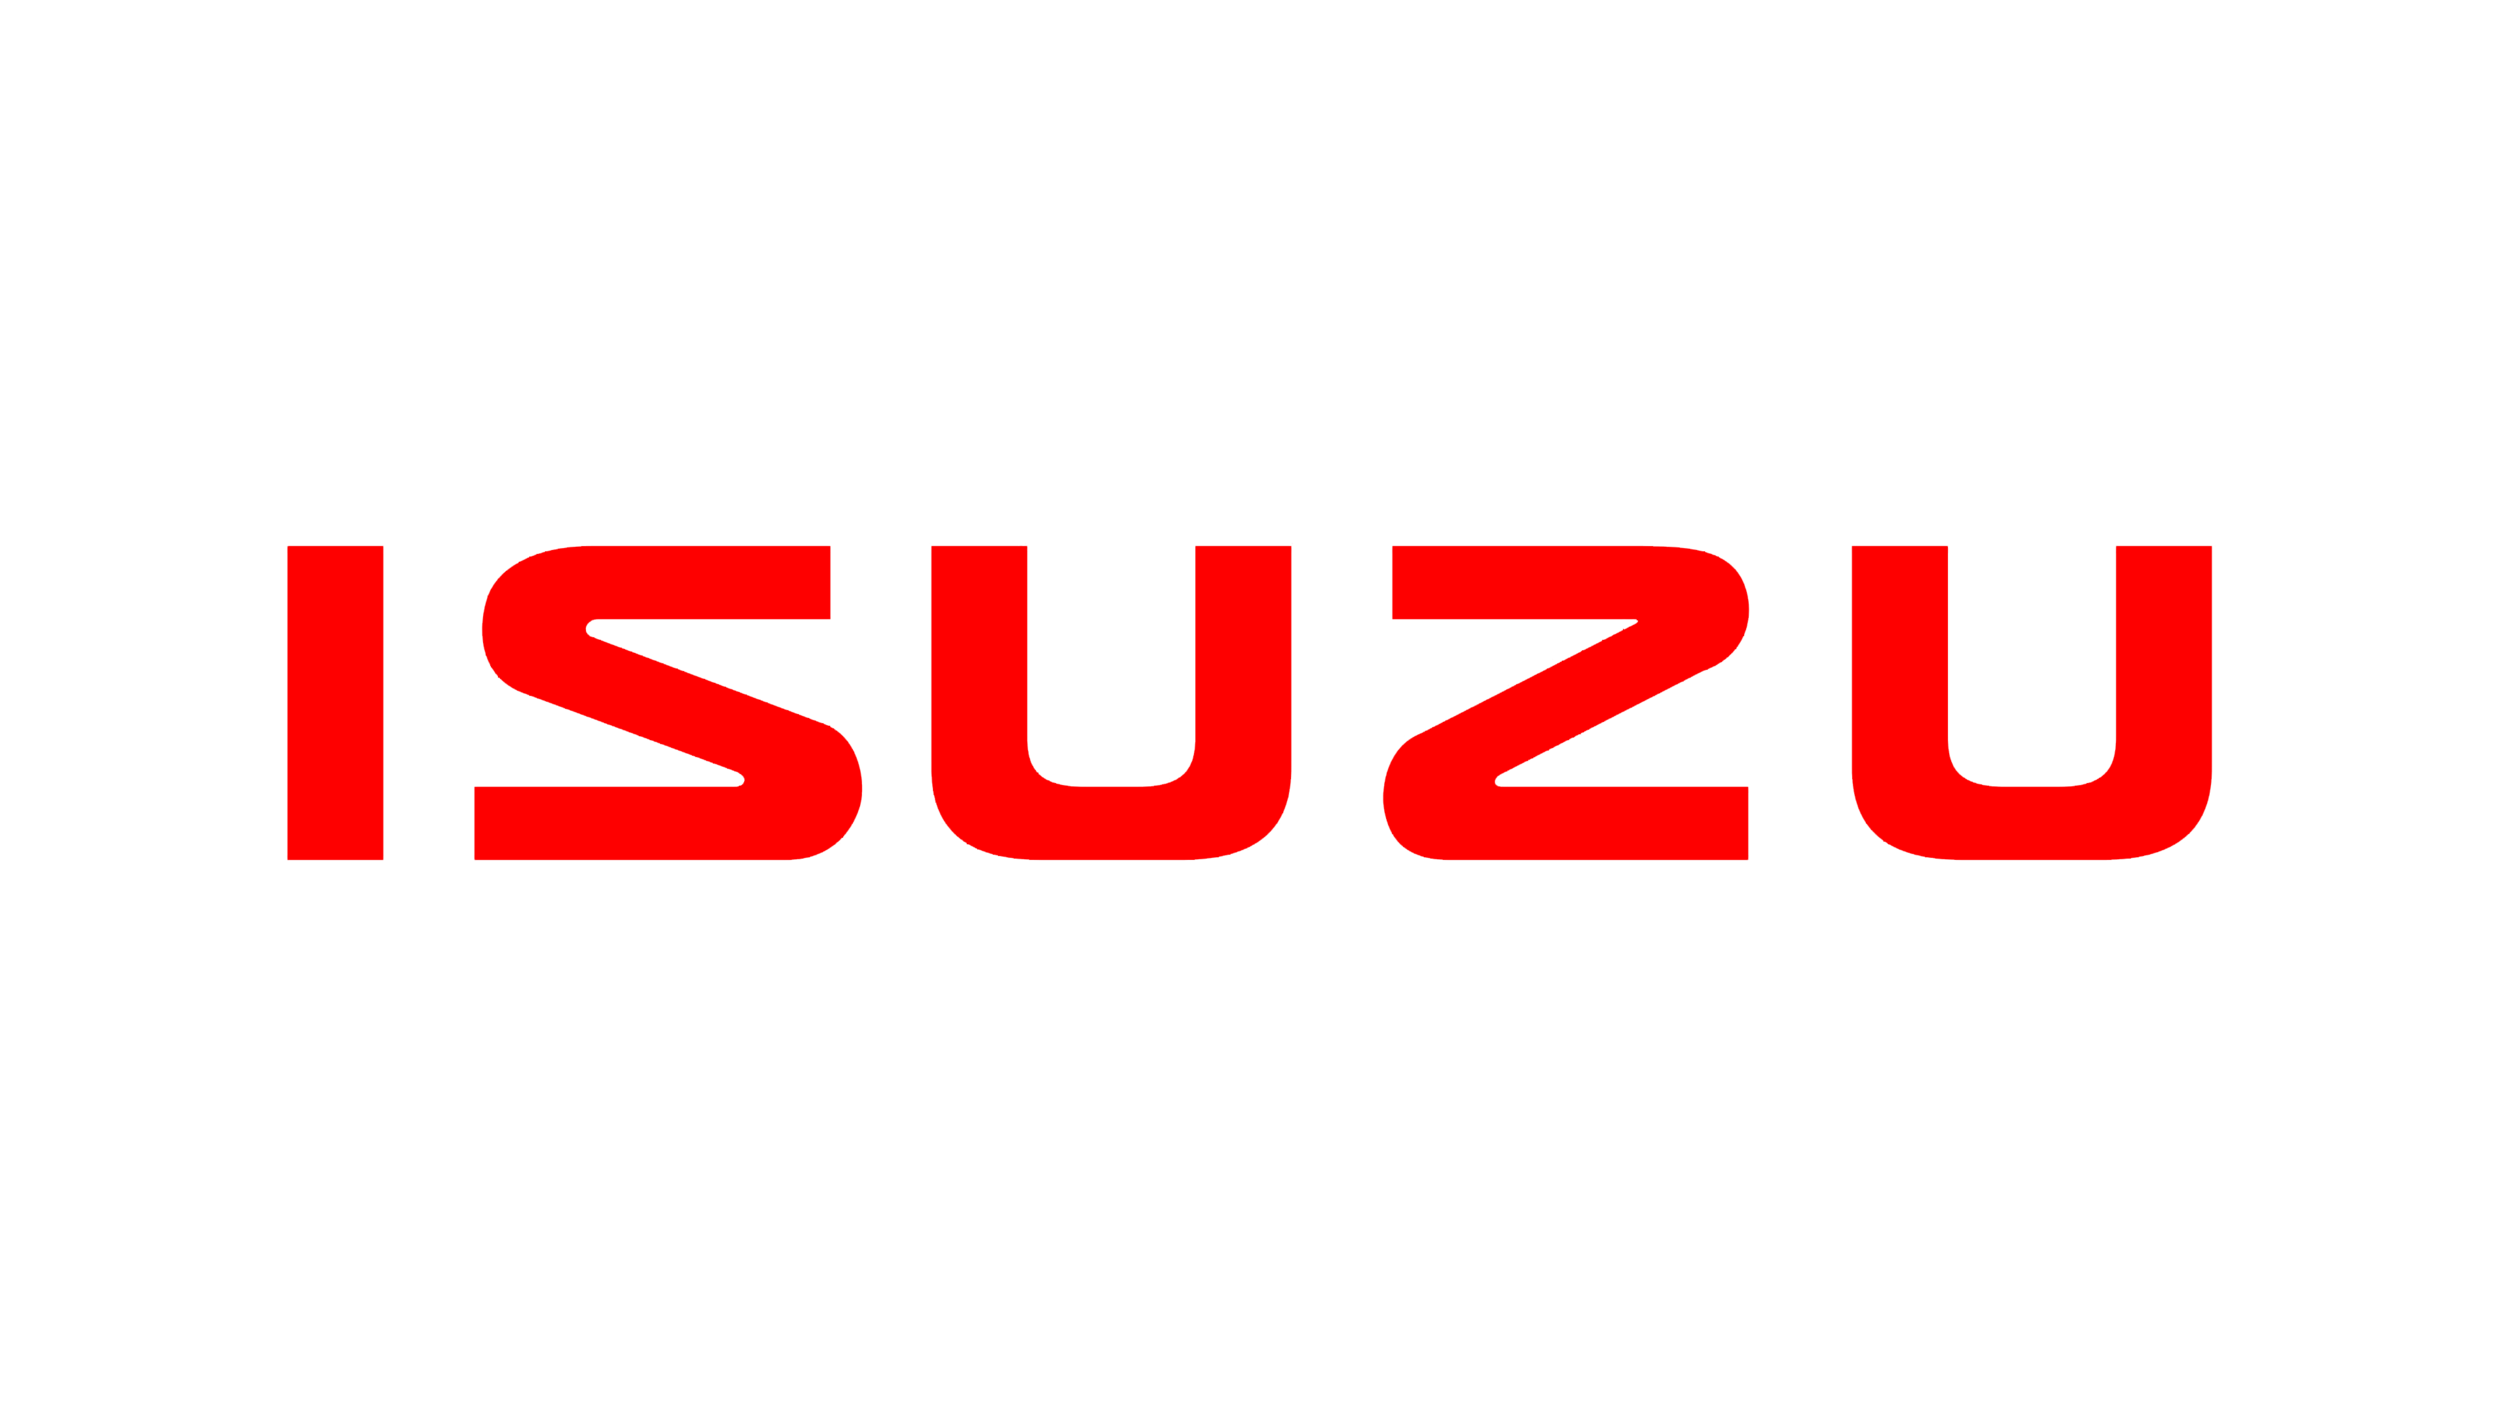 Isuzu-logo-1991-3840x2160.png